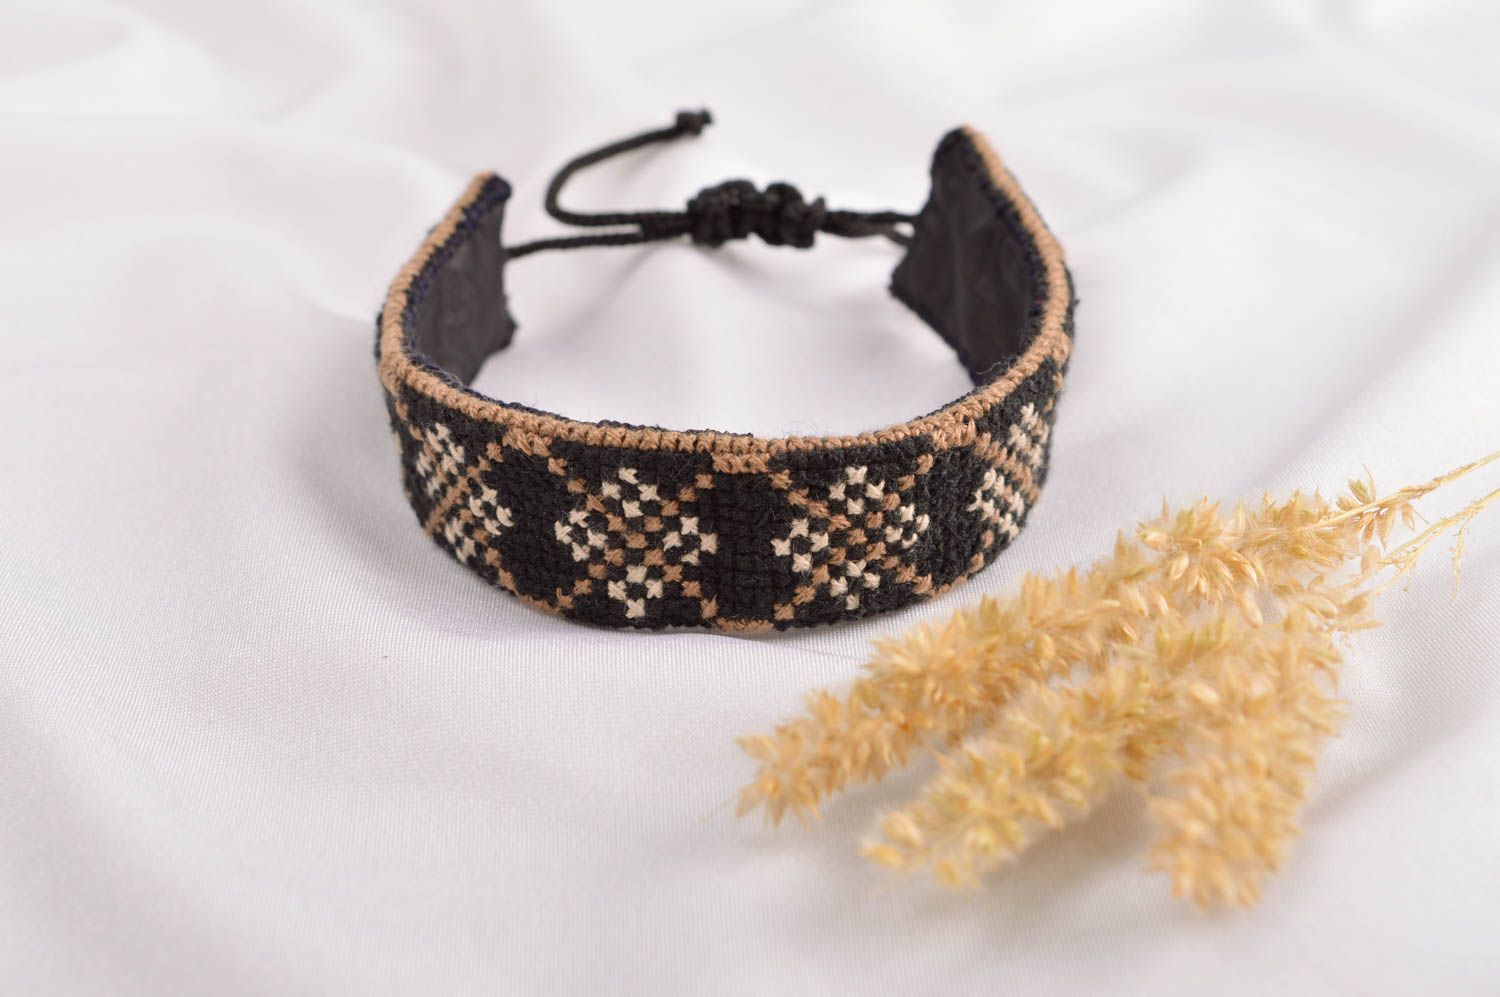 Stylish handmade fabric bracelet wrist bracelet designs textile jewelry photo 1